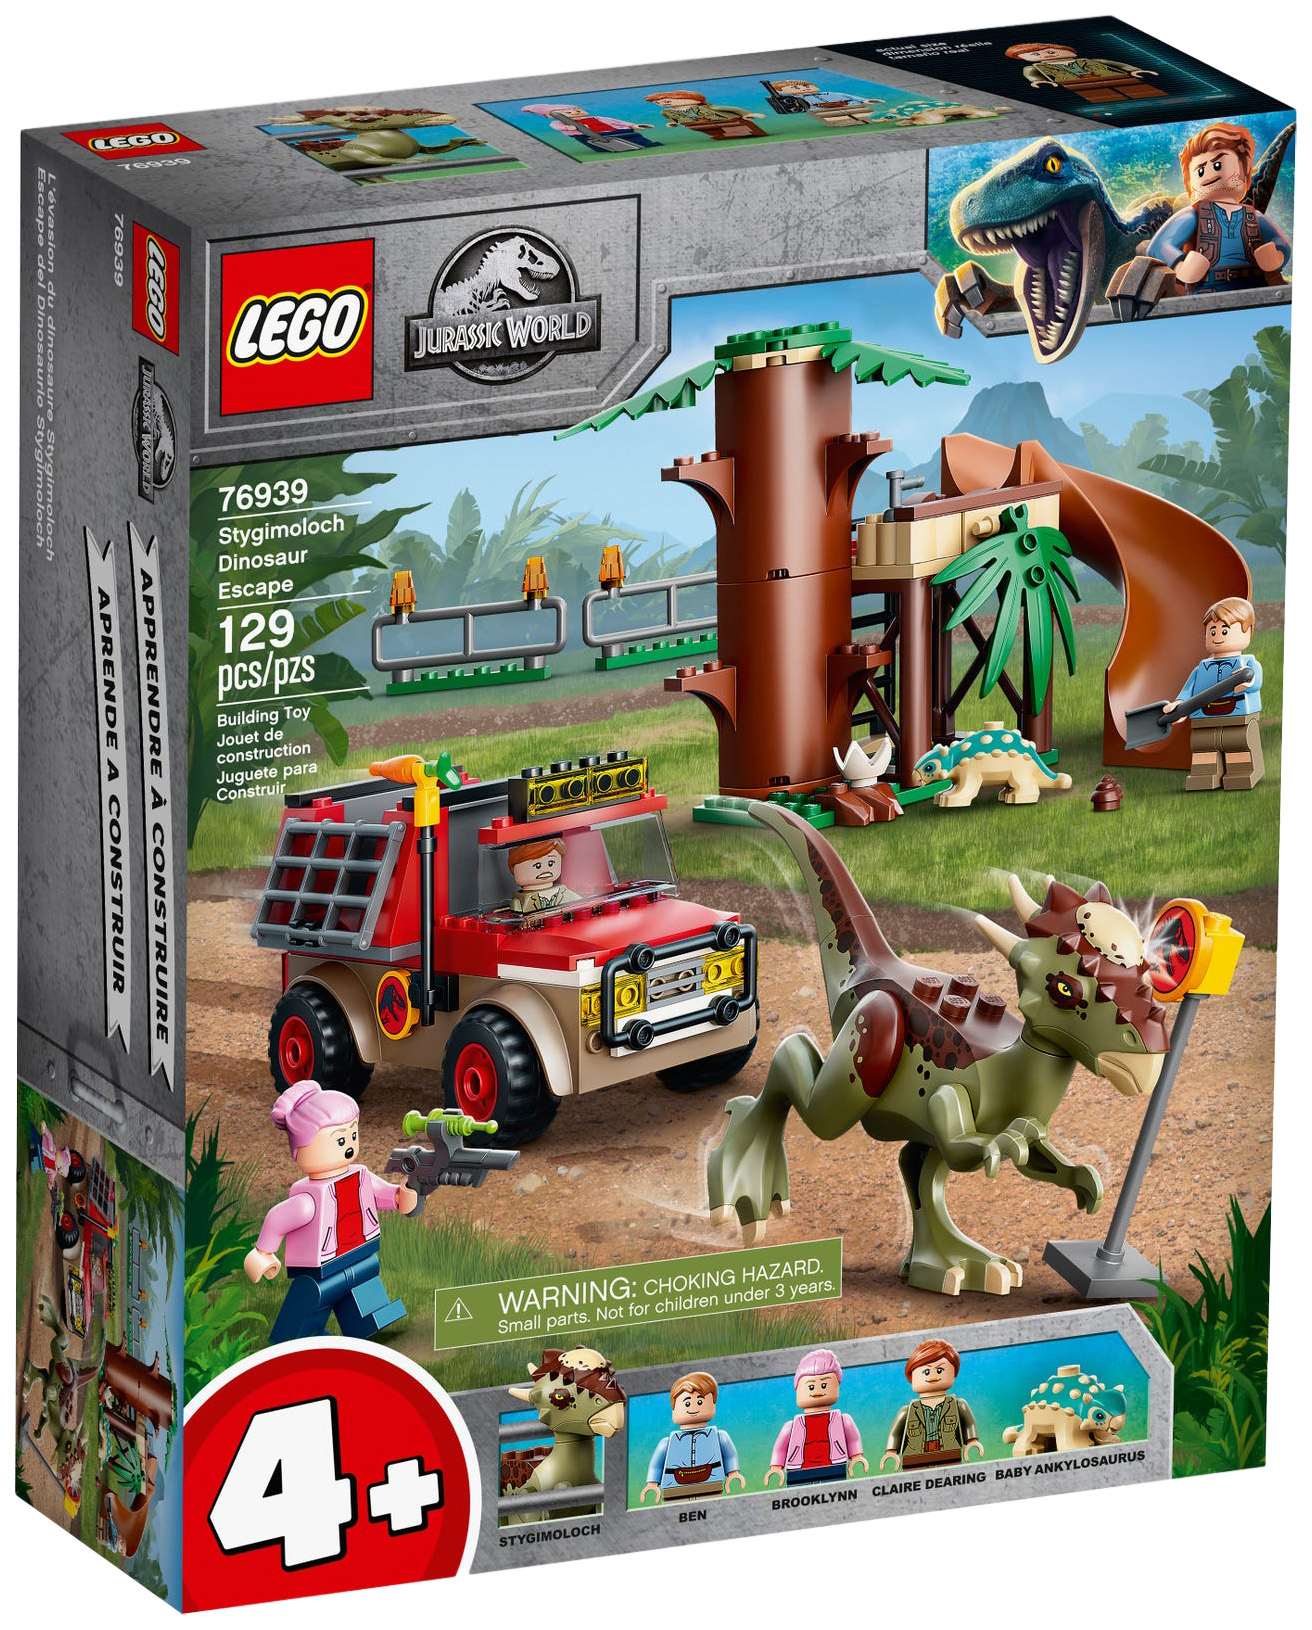 Конструктор LEGO Jurassic World 76939 Побег стигимолоха конструктор lego jurassic world 76939 побег стигимолоха